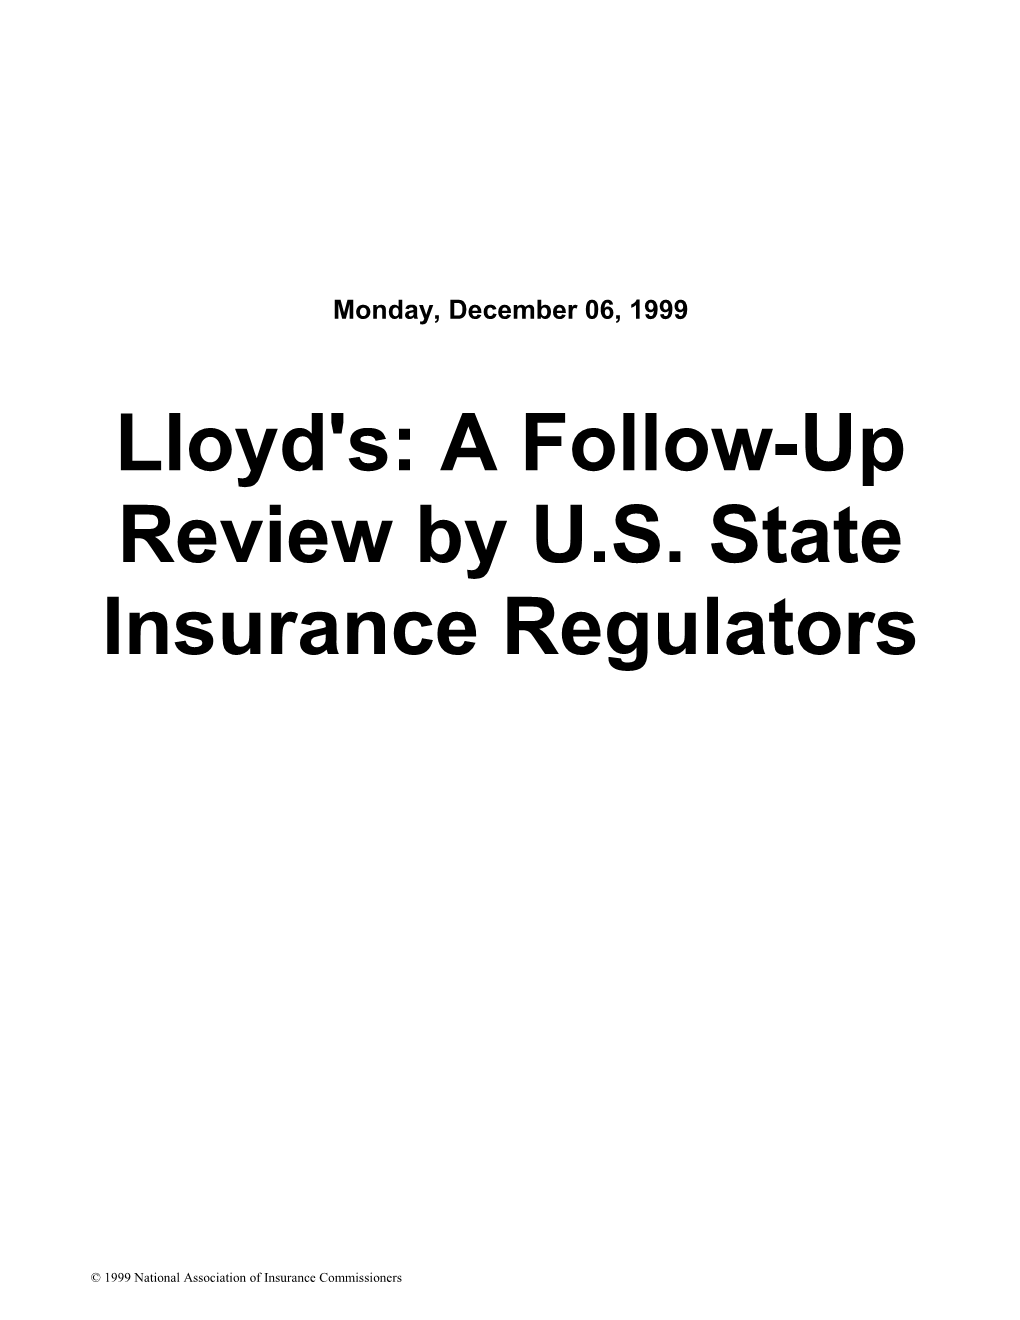 Lloyd's: a Follow-Up Review by U.S. State Insurance Regulators